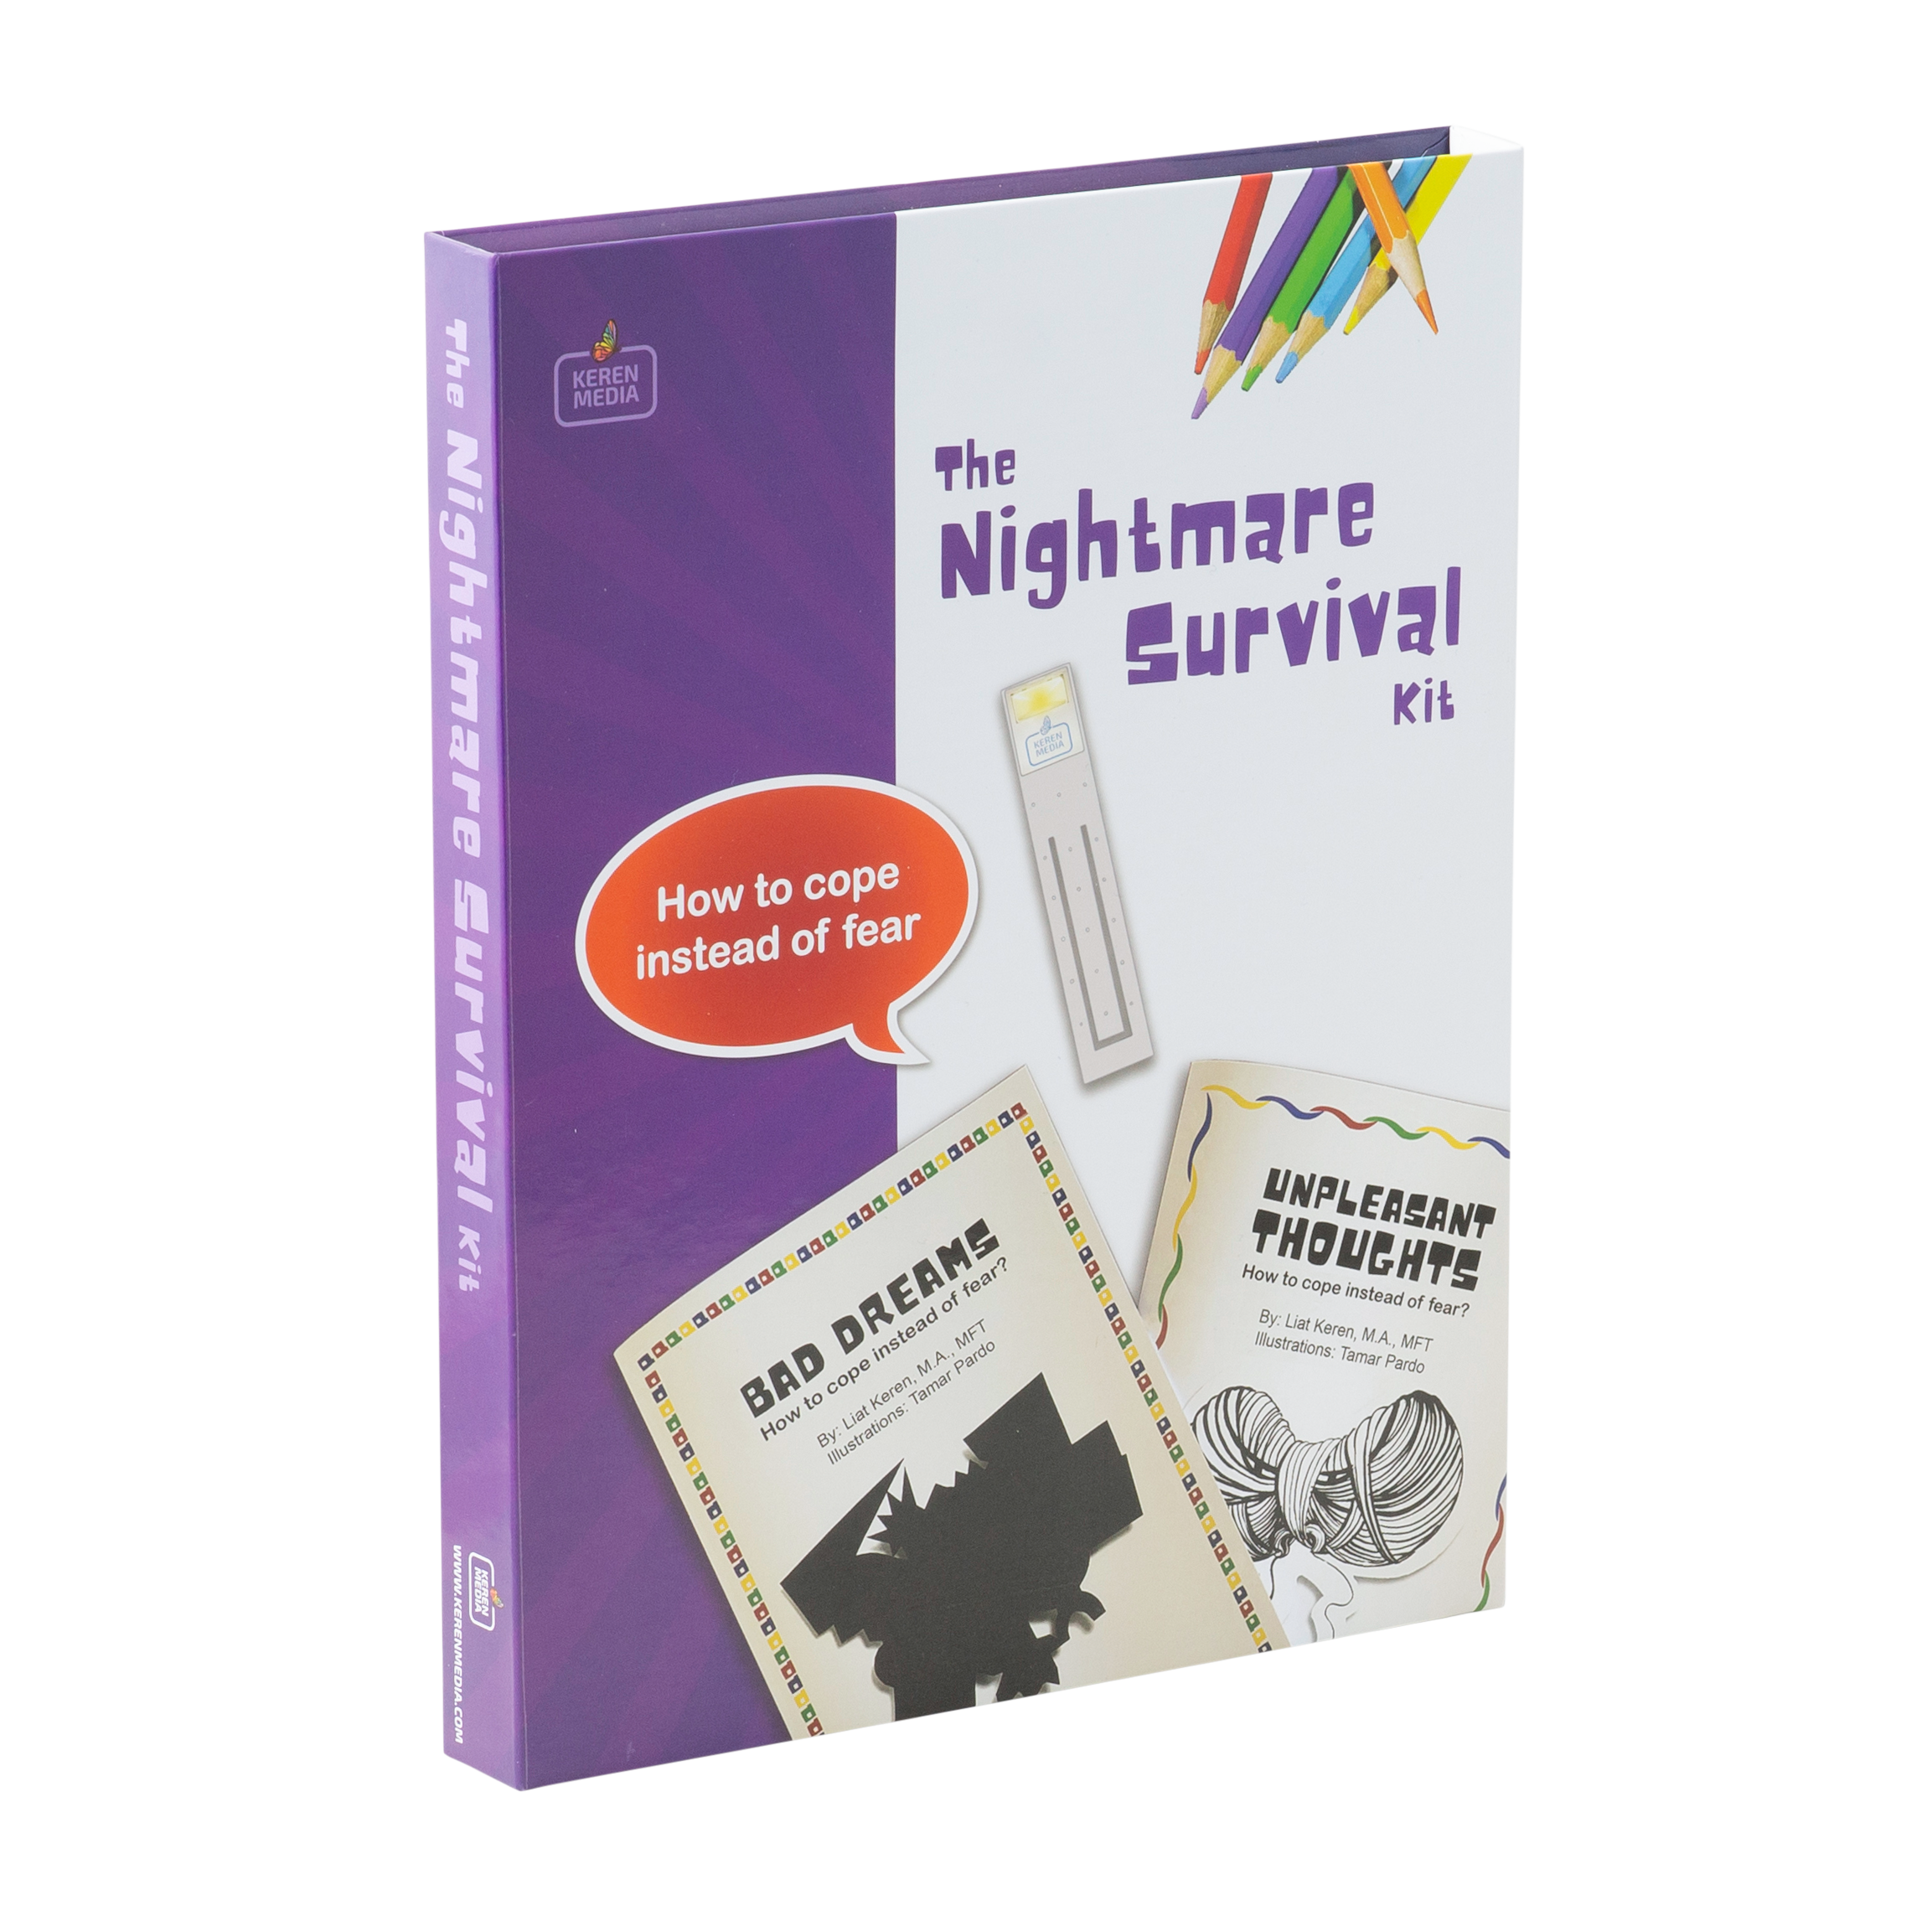 The Nightmare Survival Kit